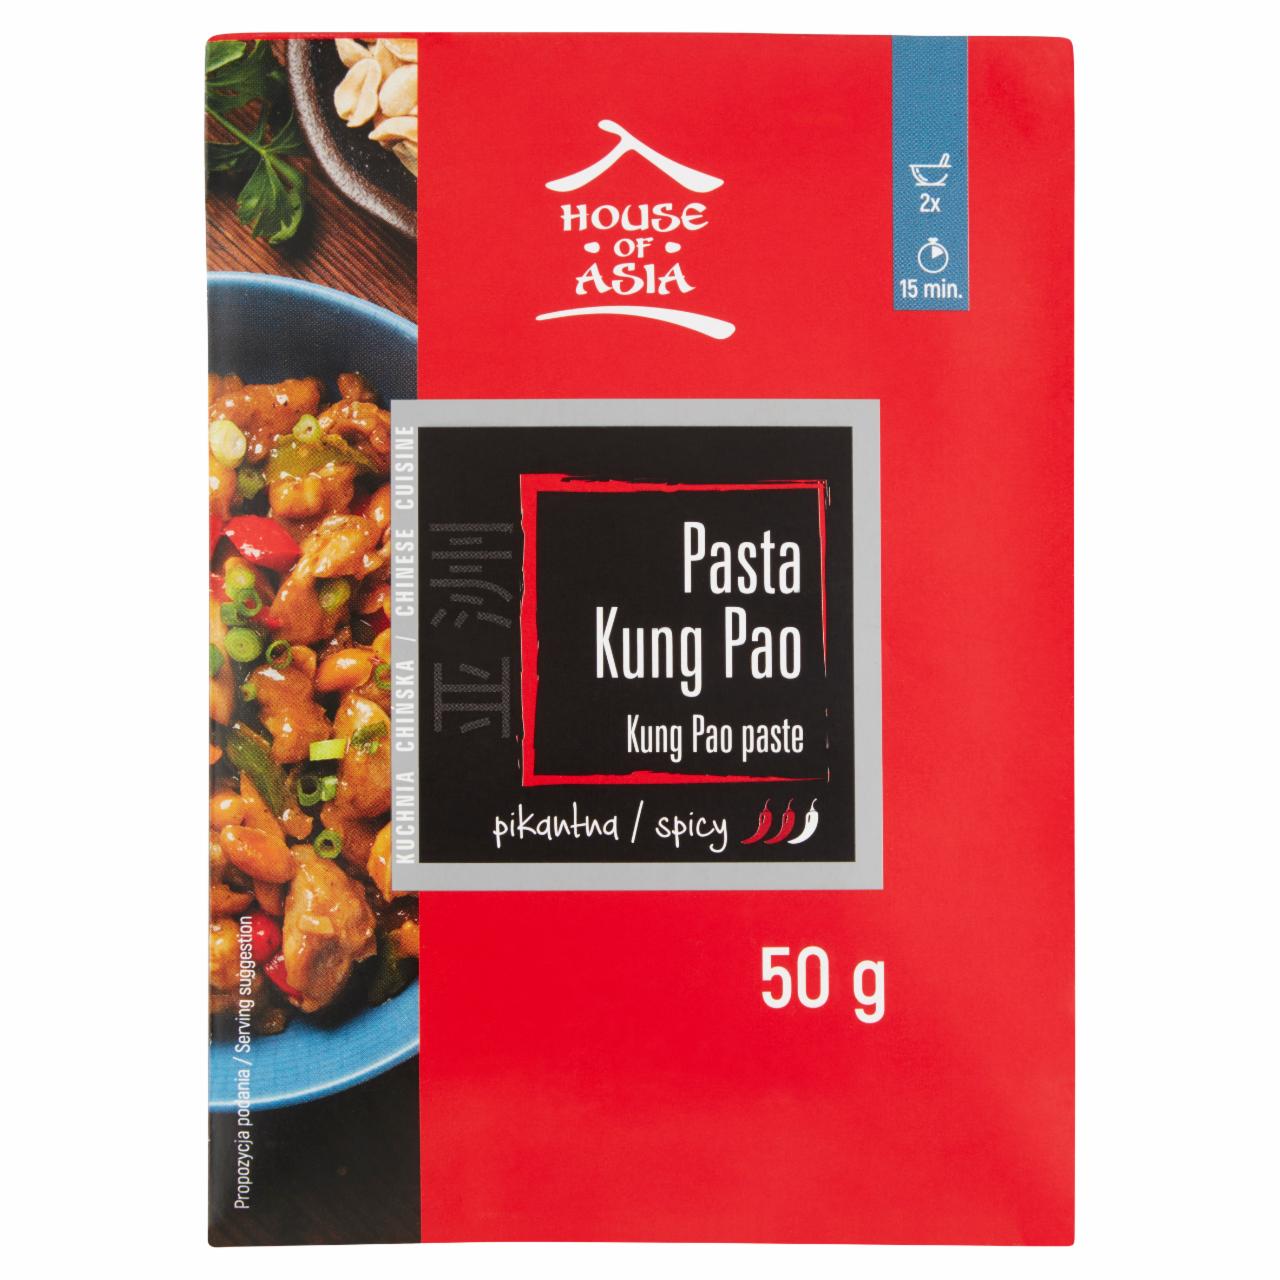 Zdjęcia - House of Asia Pasta Kung Pao 50 g